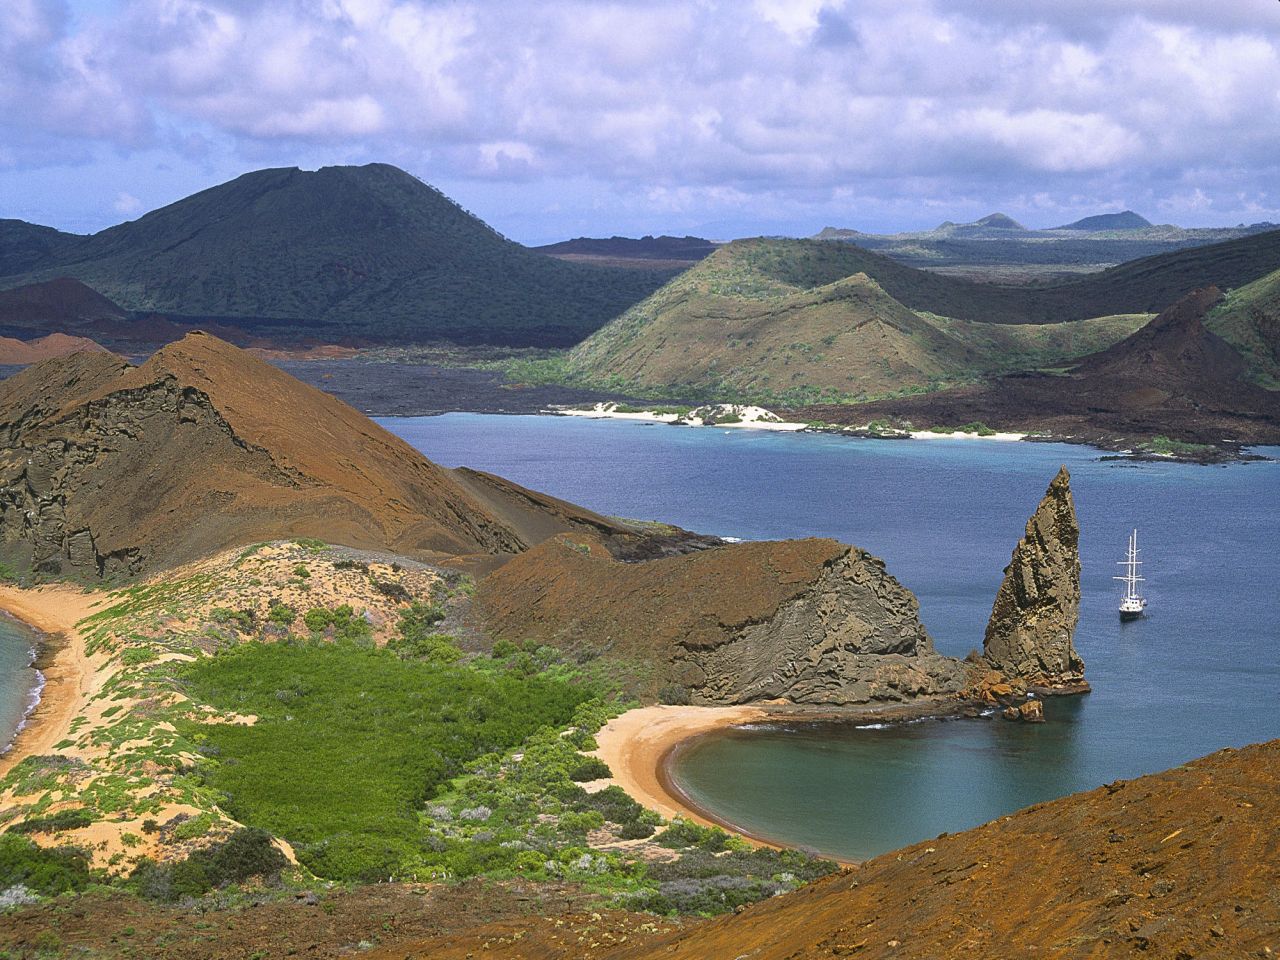 Wyspy Galapagos